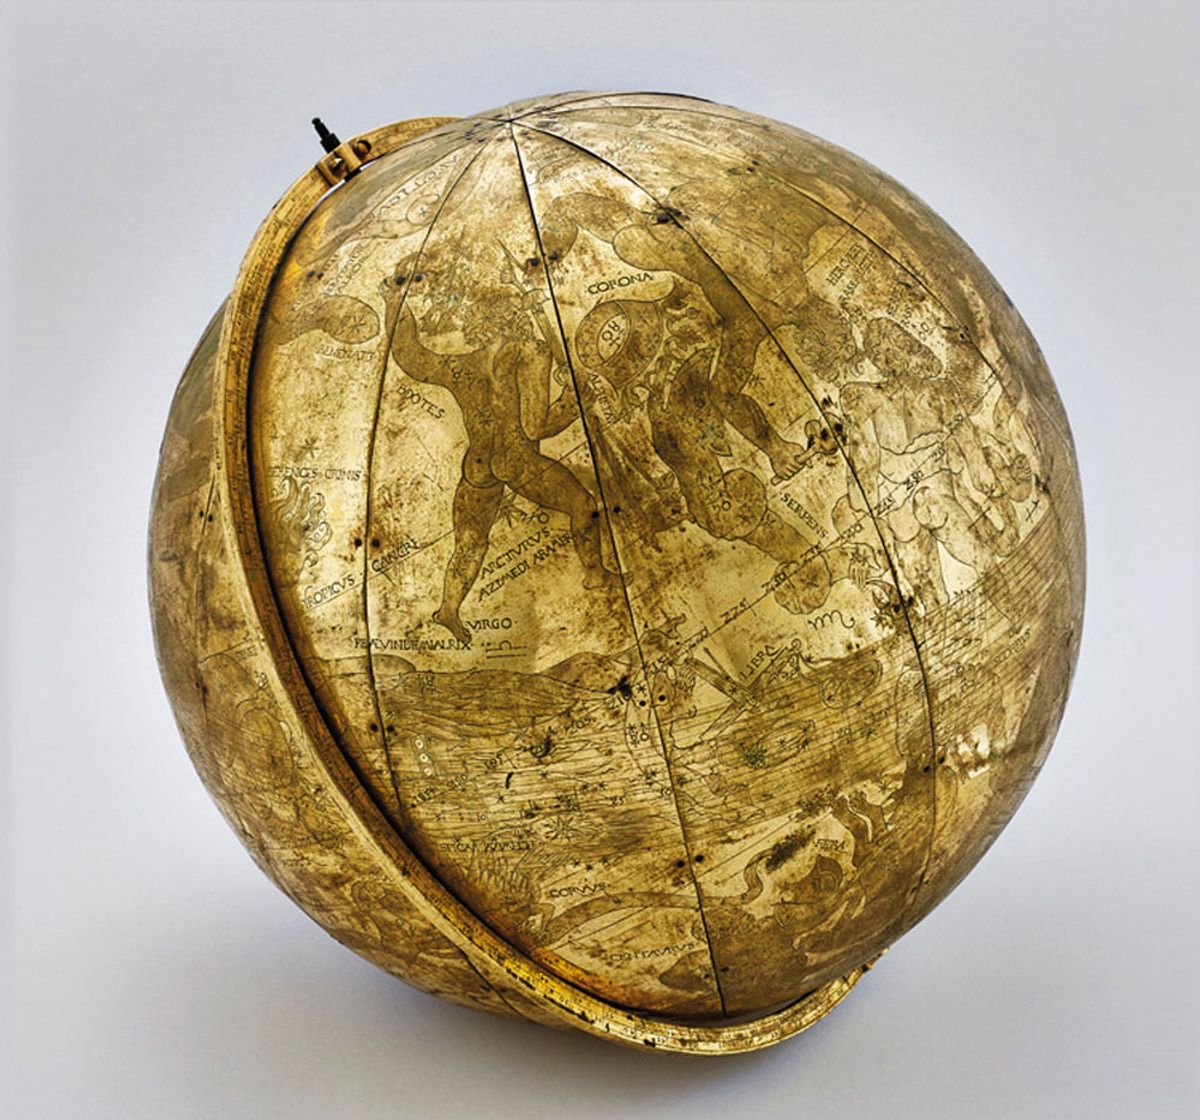 Schlissler's 1575 celestial globe drew on Portuguese expertise The Administration of Parques de Sintra-Monte da Lua, Portugal